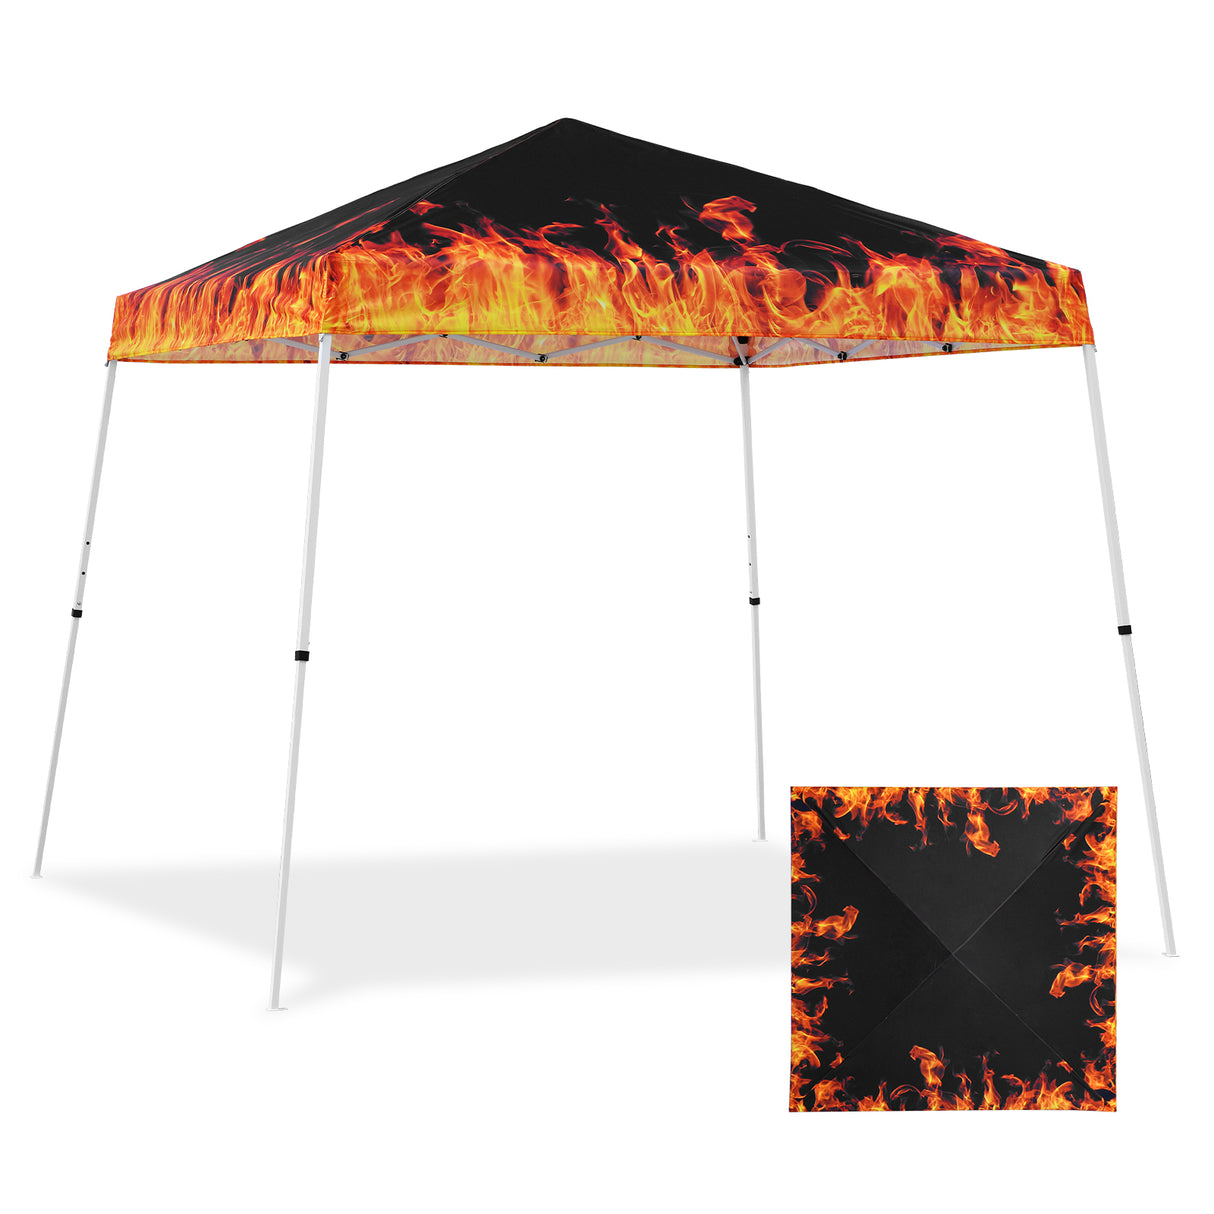 Eagle Peak SHADE GRAPHiX Slant Leg 10x10 Easy Setup Pop Up Canopy Tent with Digital Printed Flame Top